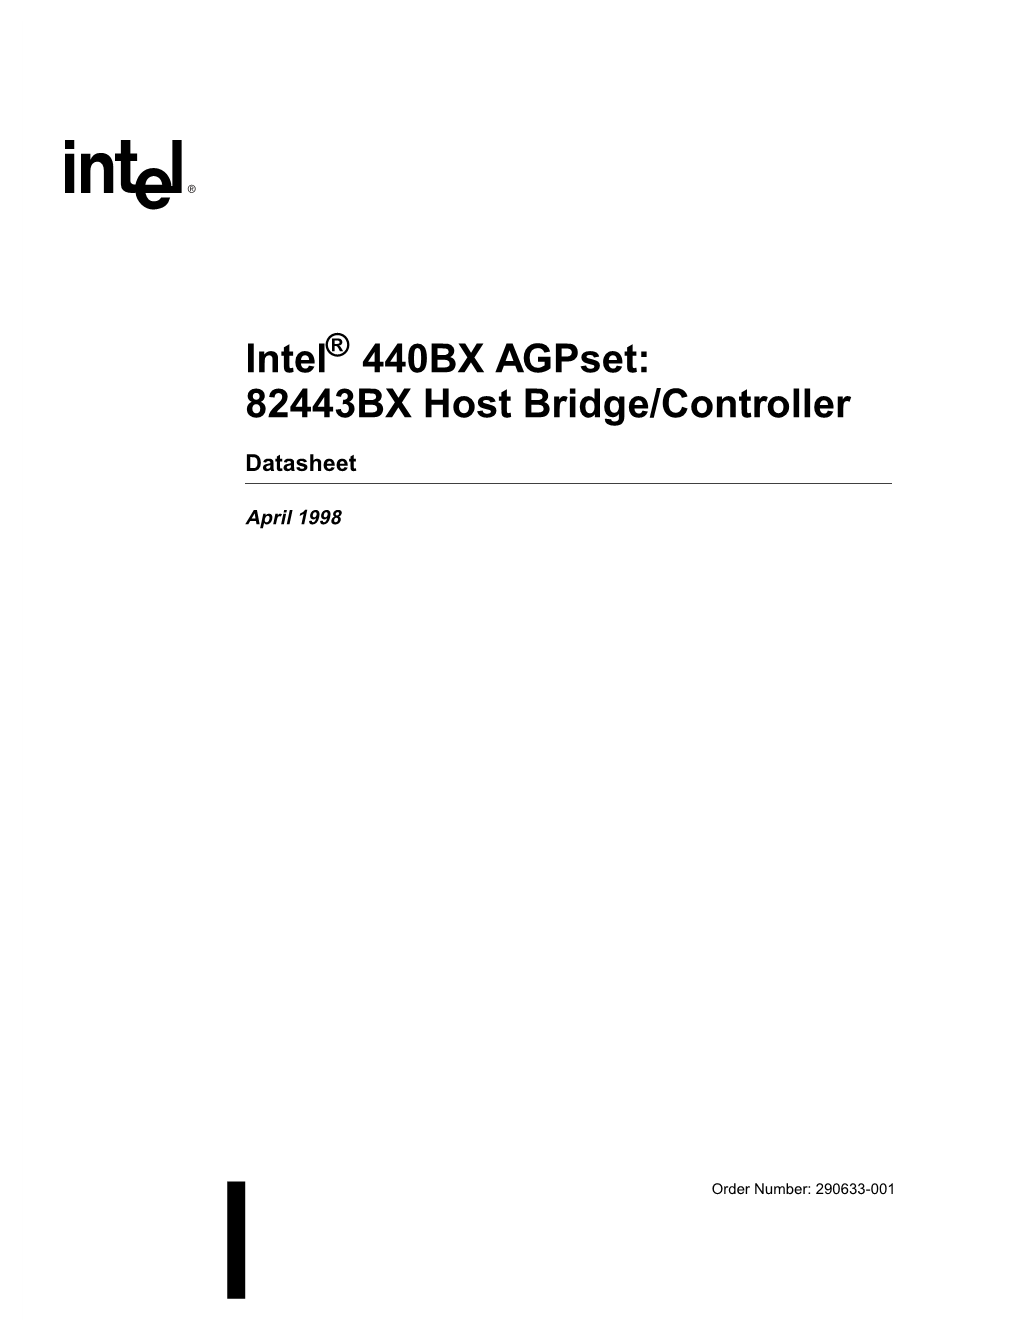 Intel 440BX Agpset: 82443BX Host Bridge/Controller